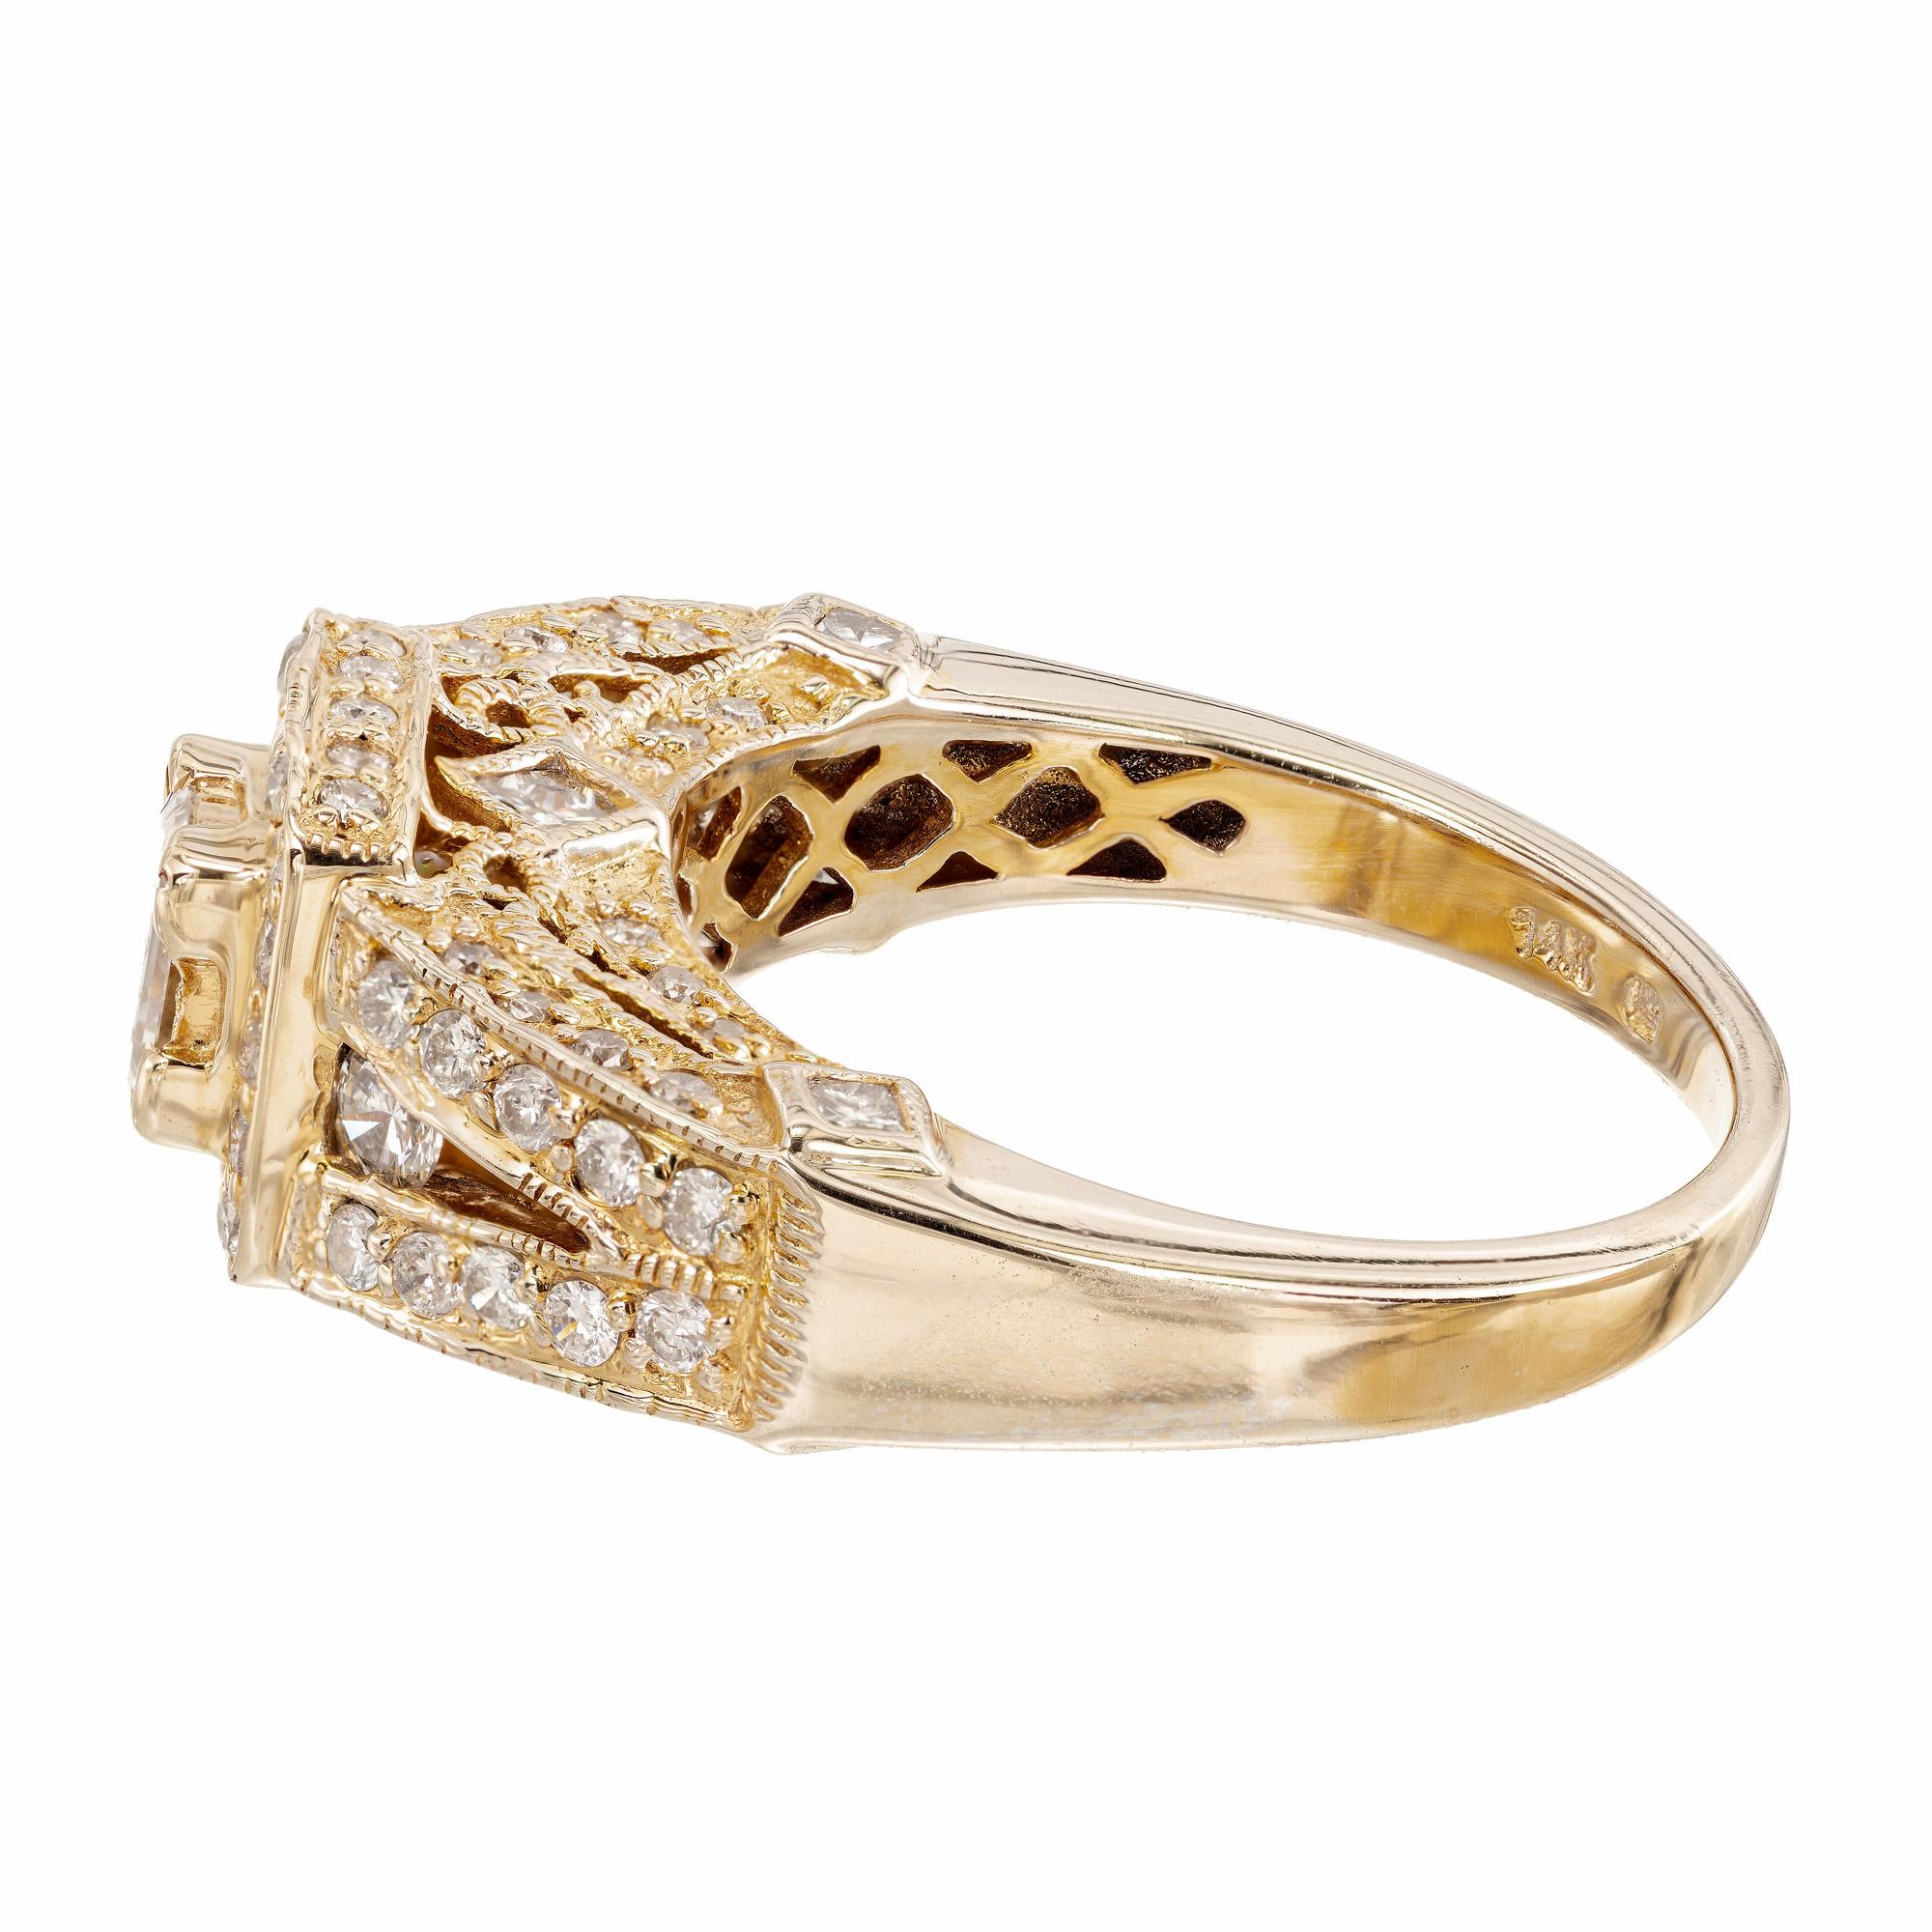 .50 carat oval diamond engagement ring